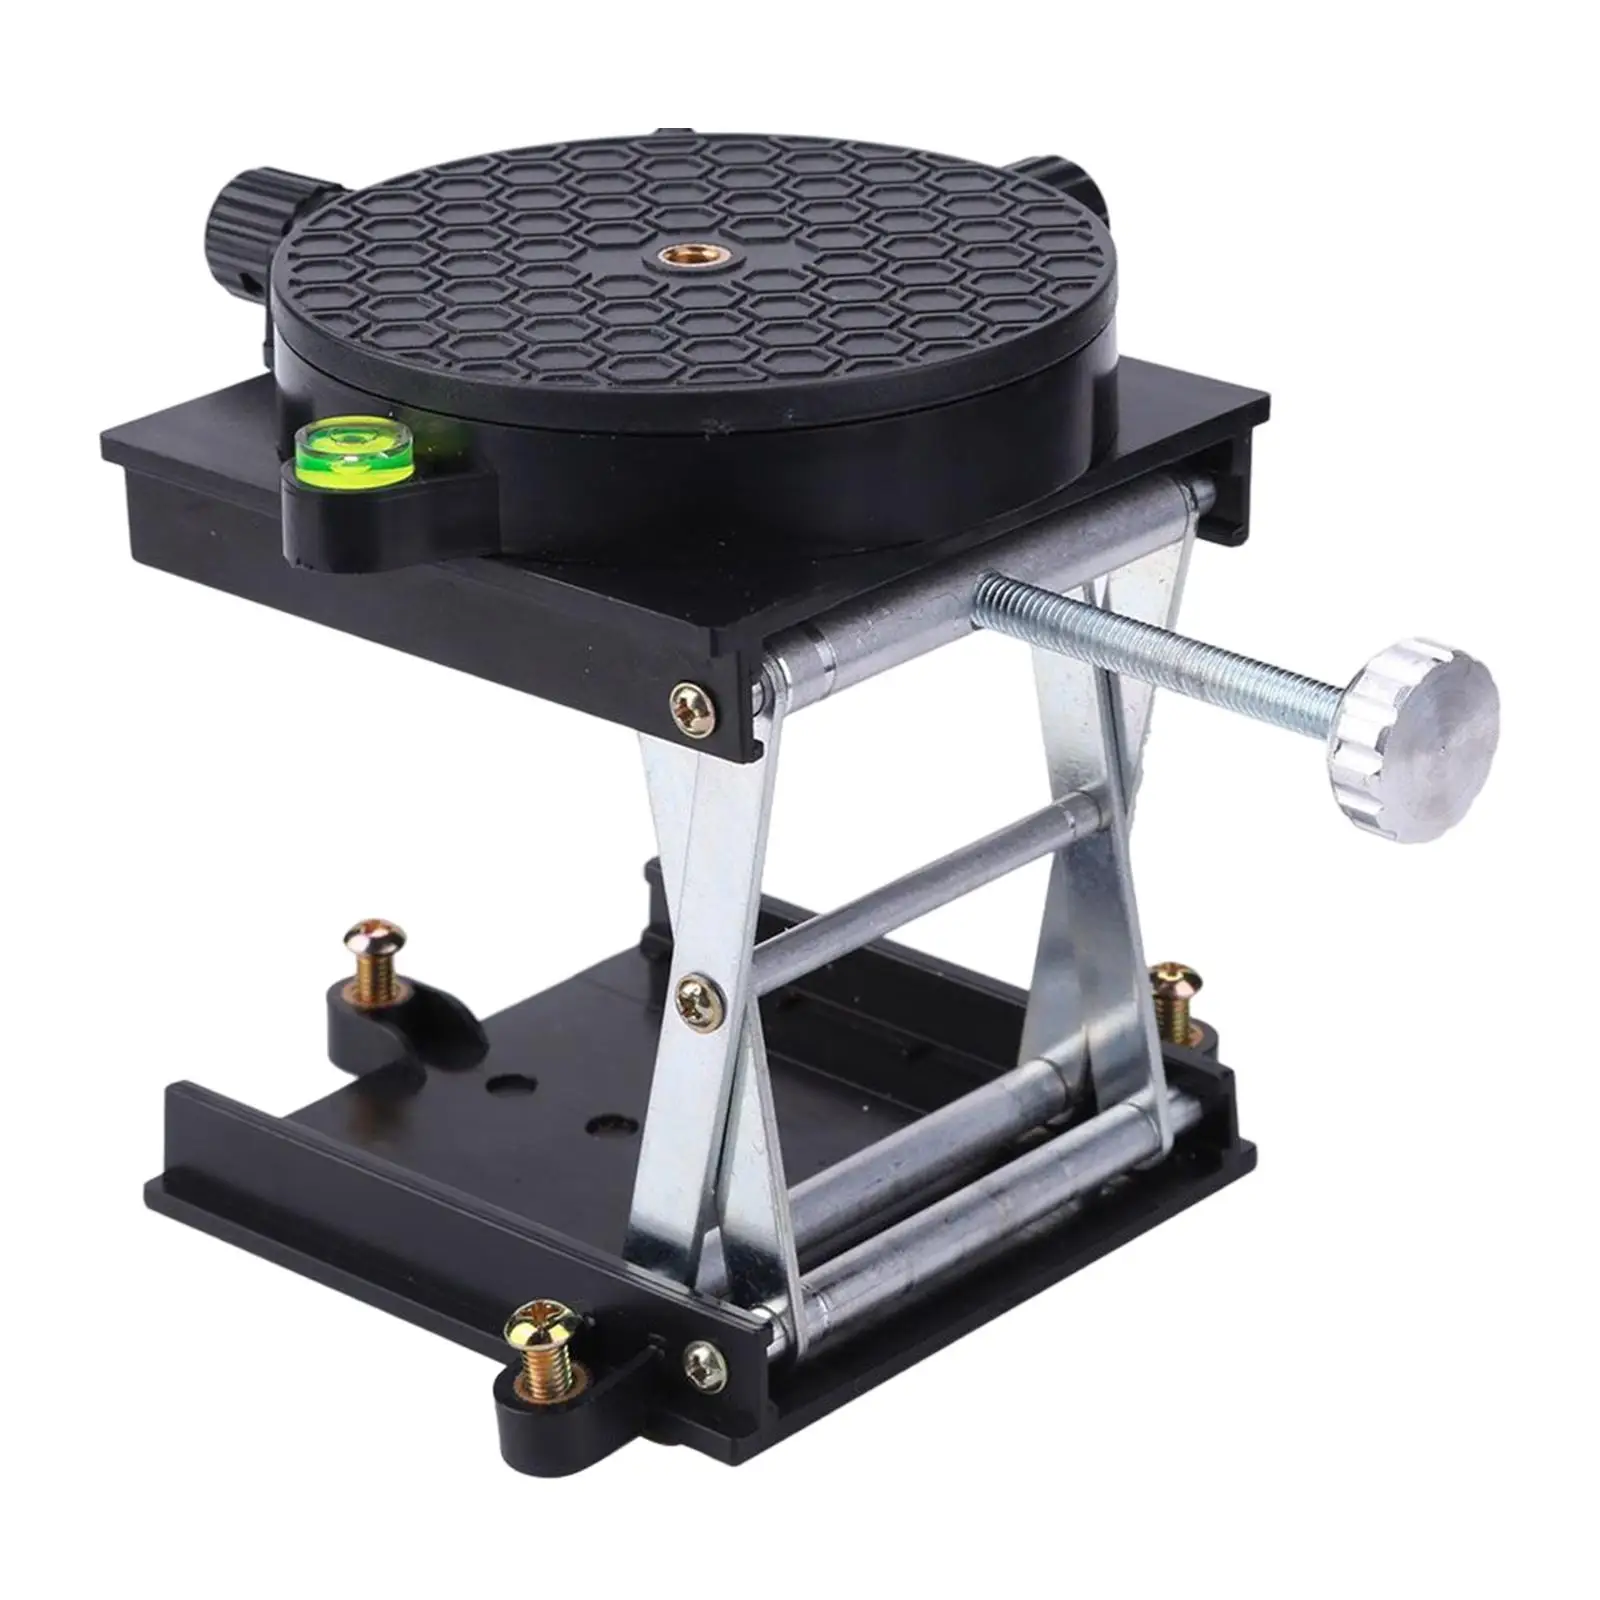 Lab Scissors , Laboratory Support Platform, Adjustable Stable Aluminum Alloy Lifting Platform, Manual Control Stand Table